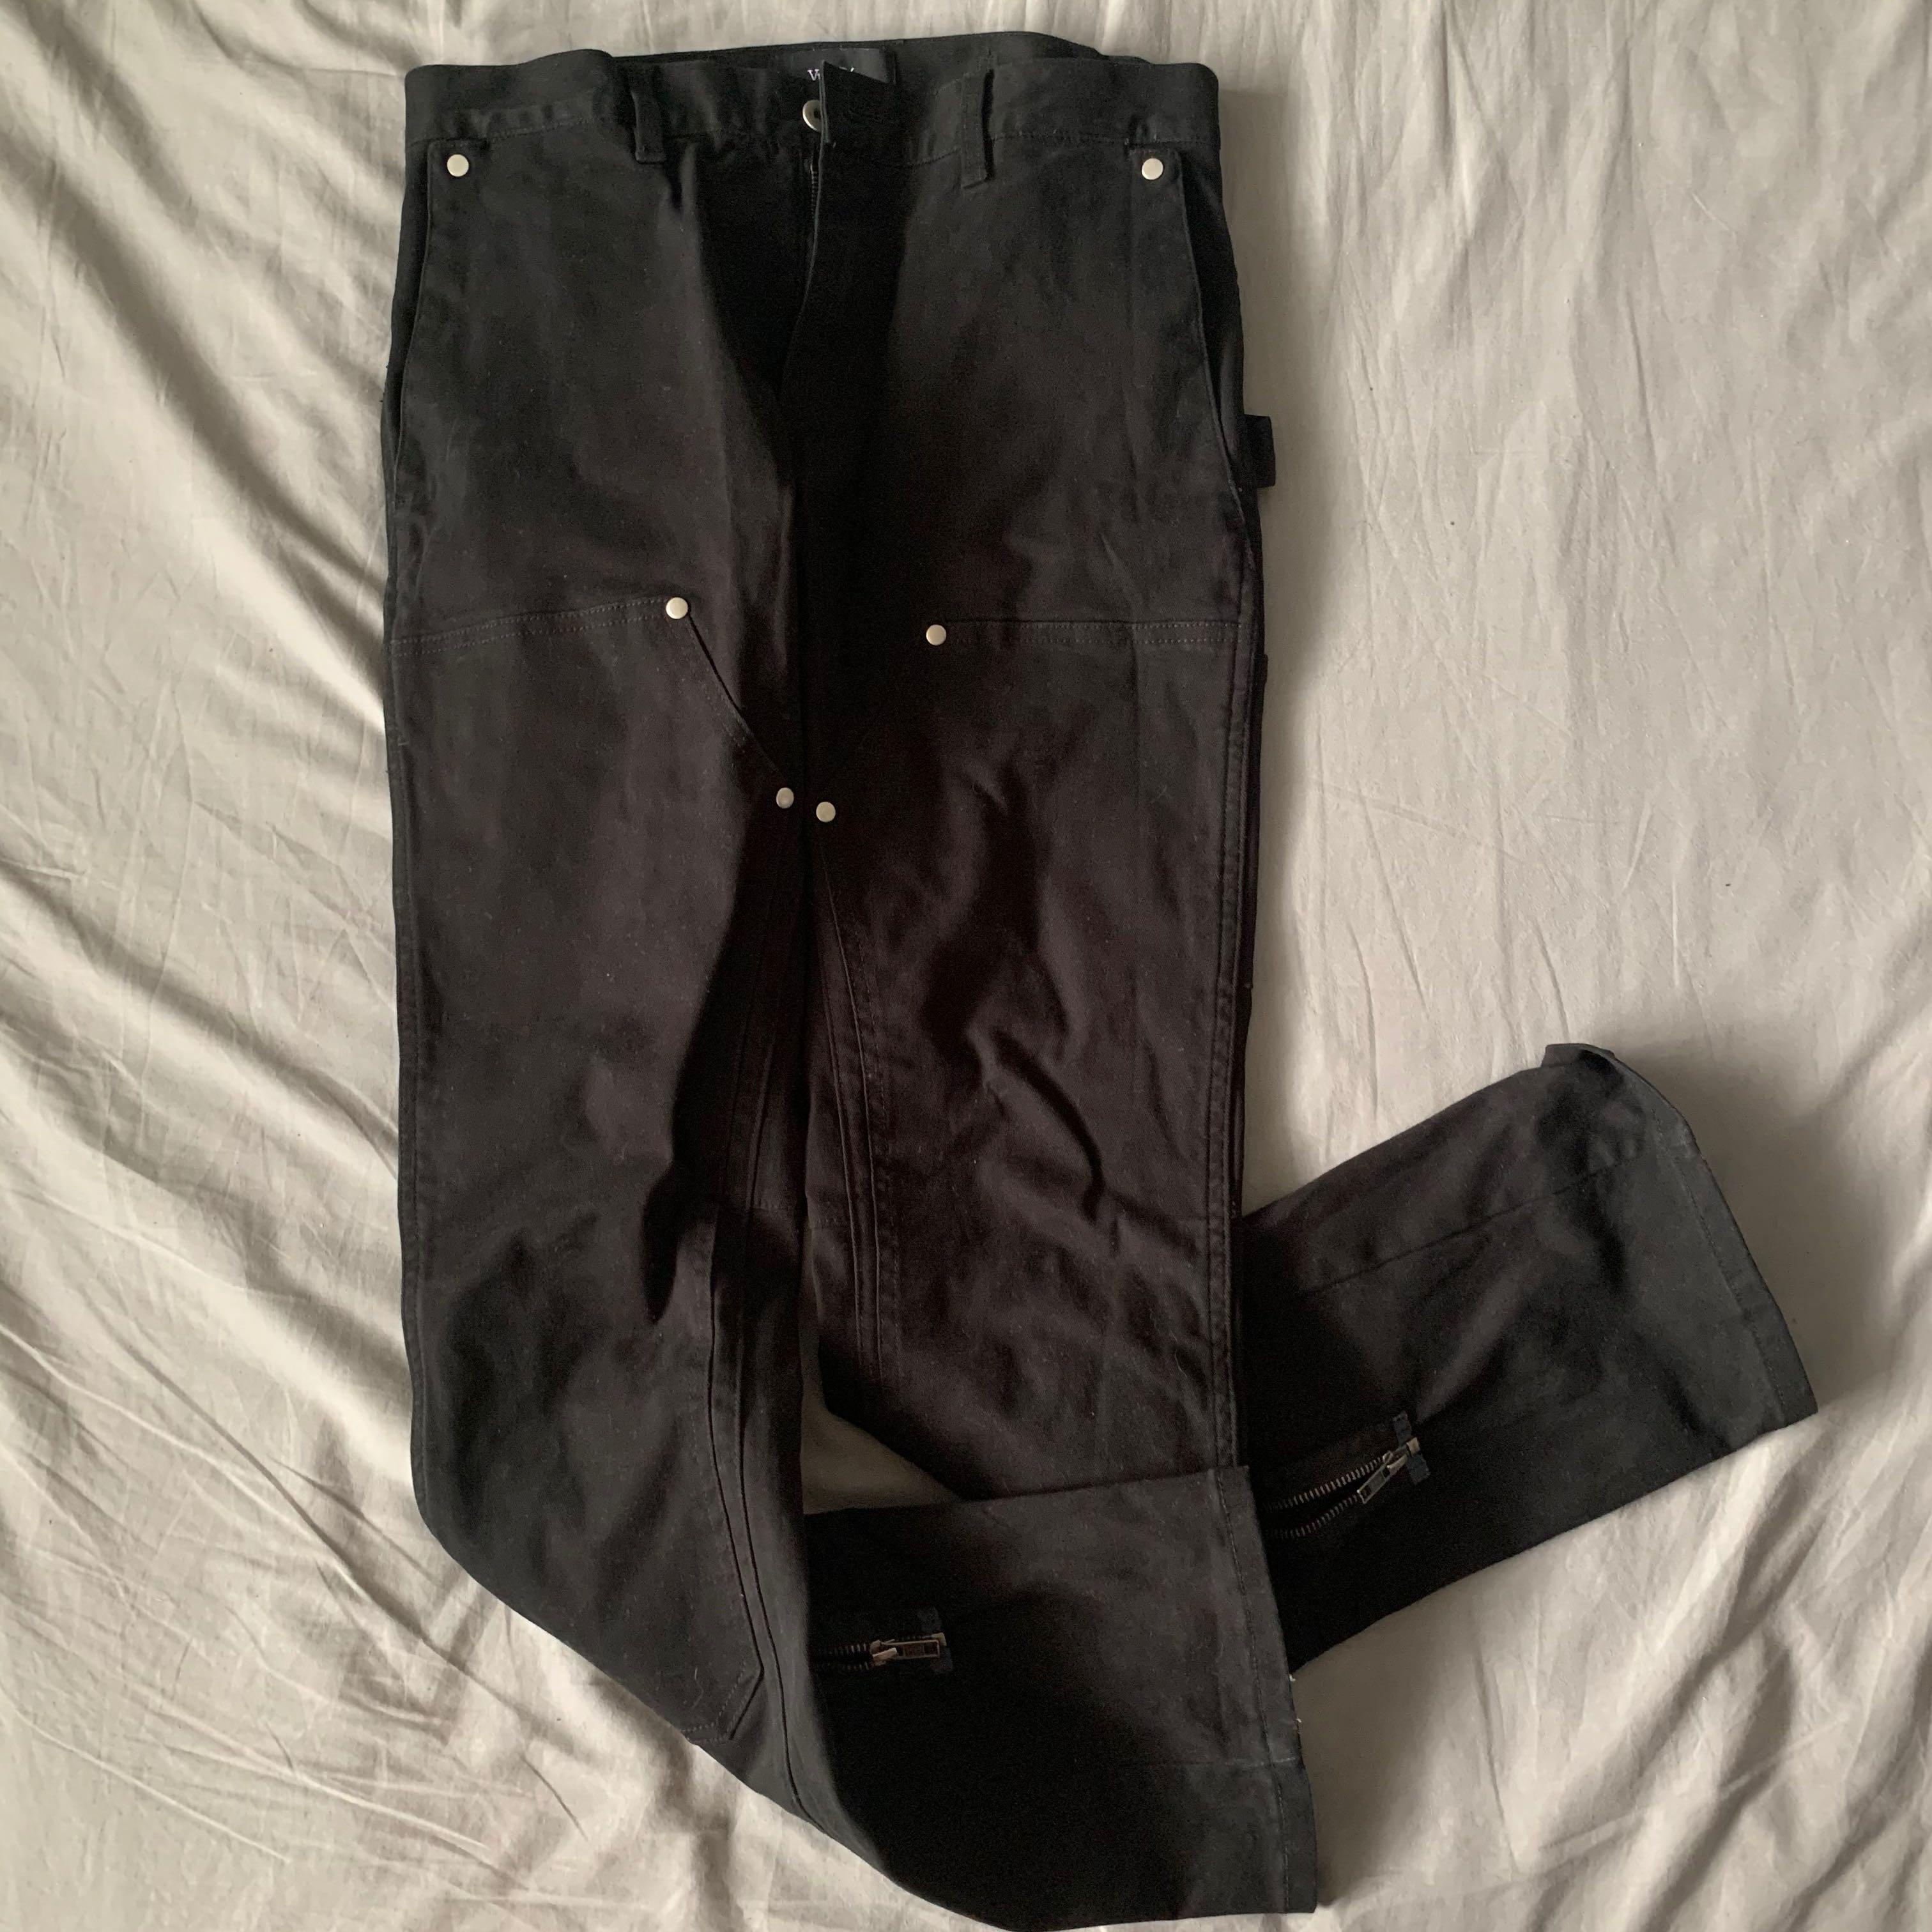 Vuja de kenijima style flared black pants with back zip